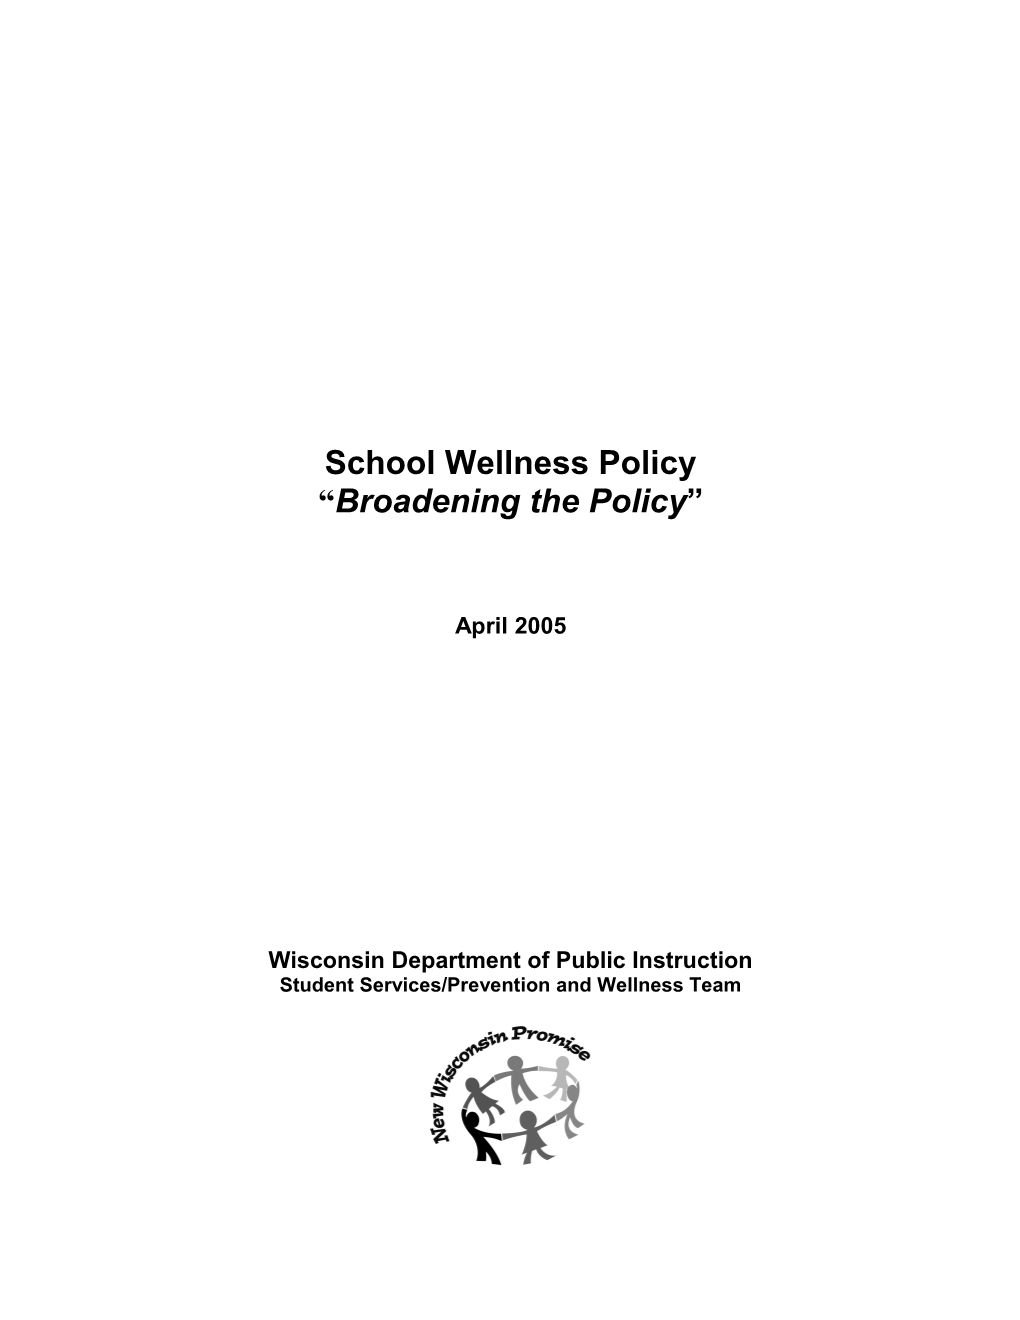 School Wellness Policies: Broadening the Policy